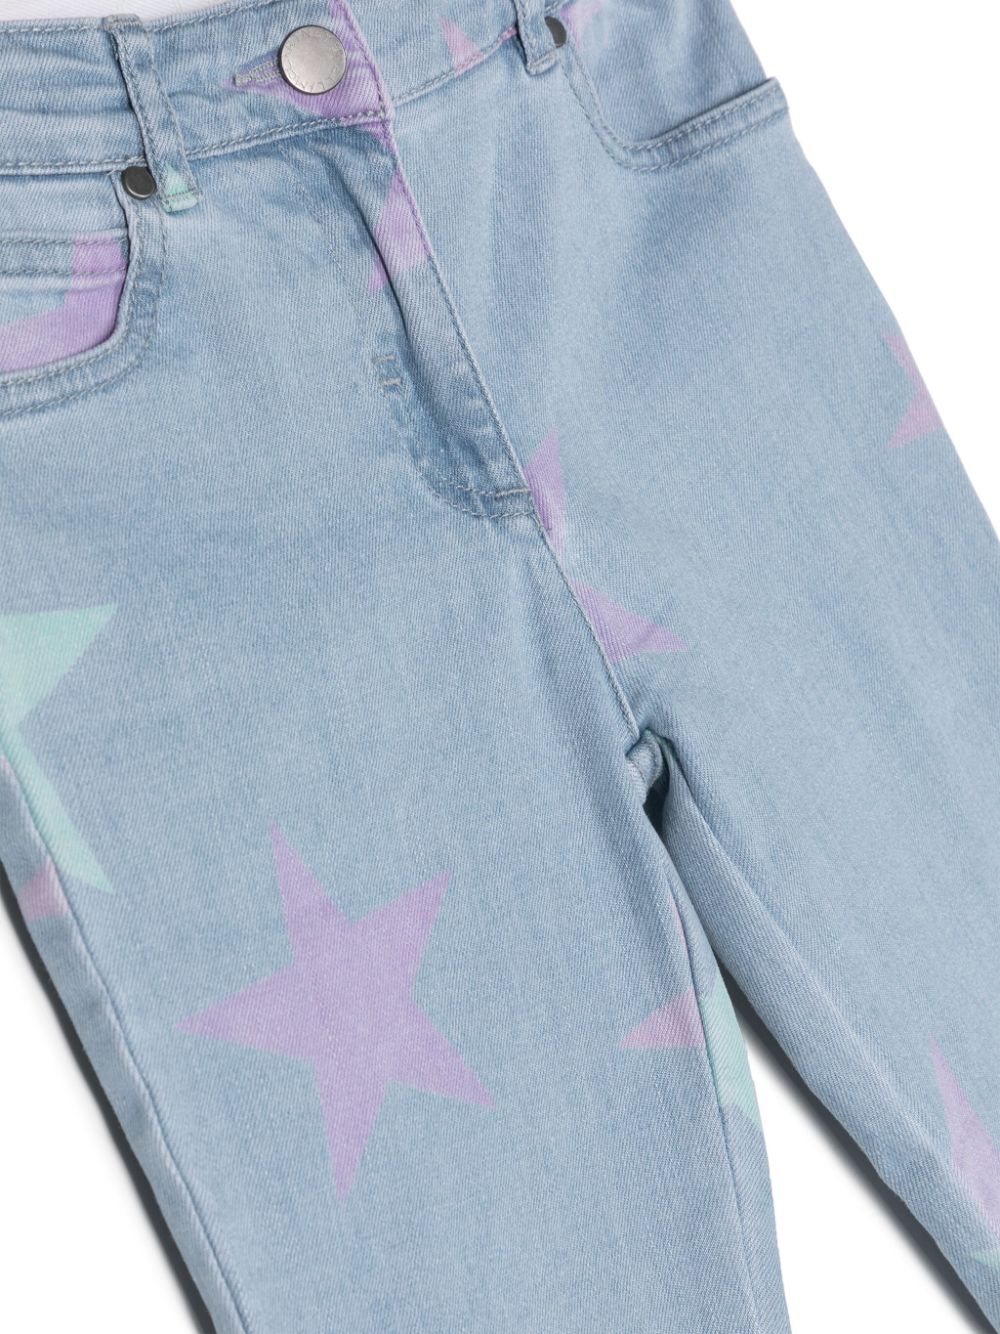 Stella McCartney Kids jeans con stampa